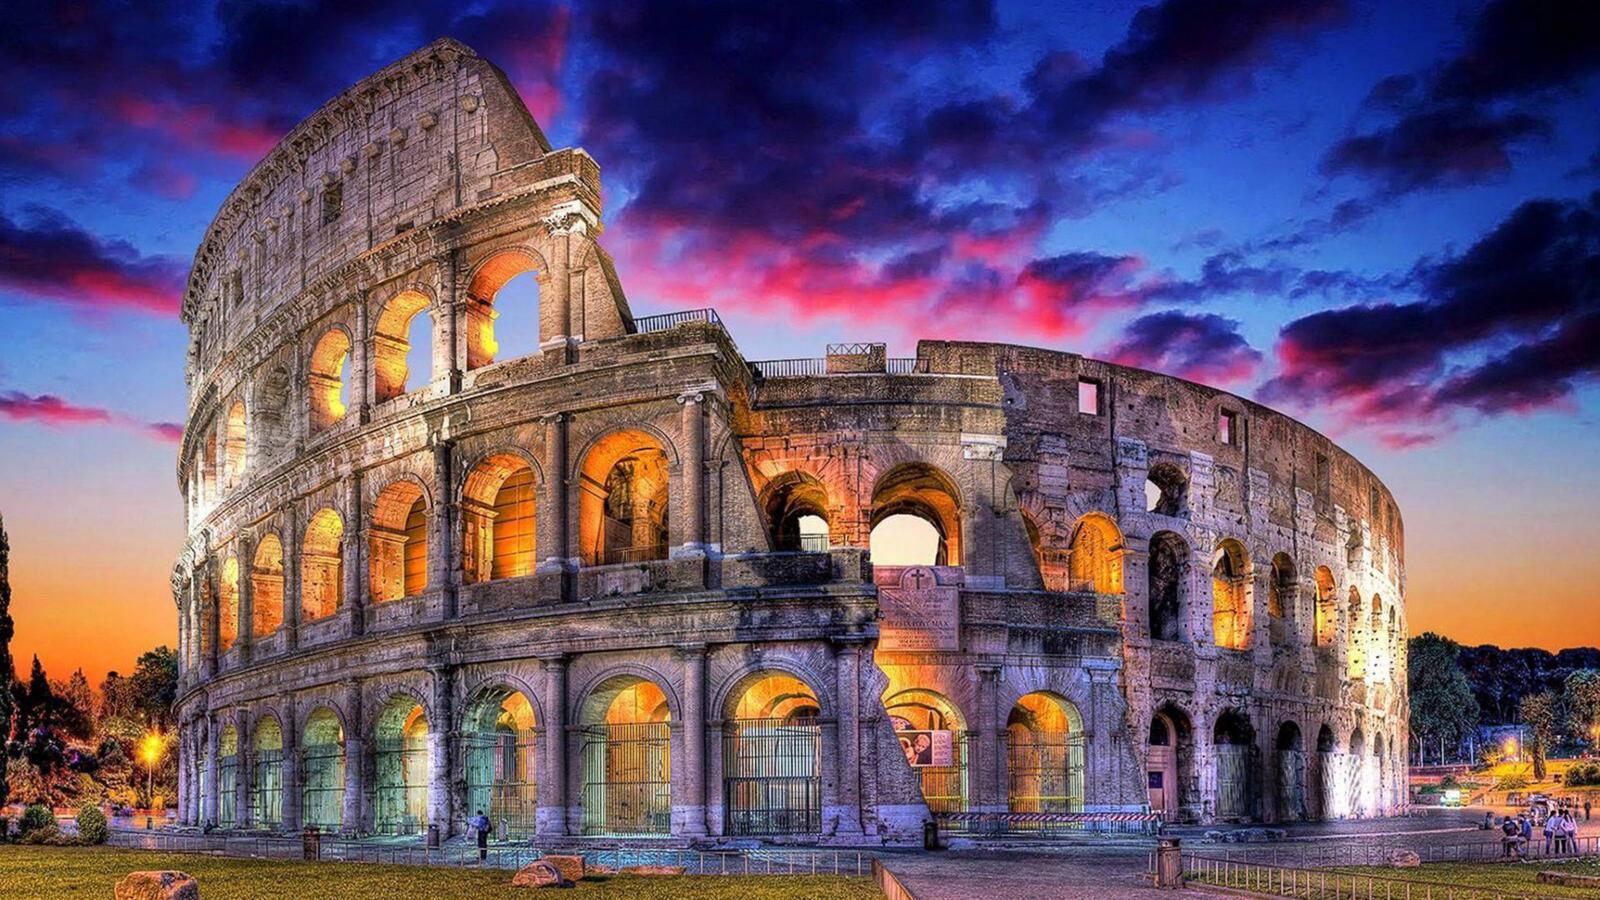 Обои Colosseum Rome Italy на рабочий стол